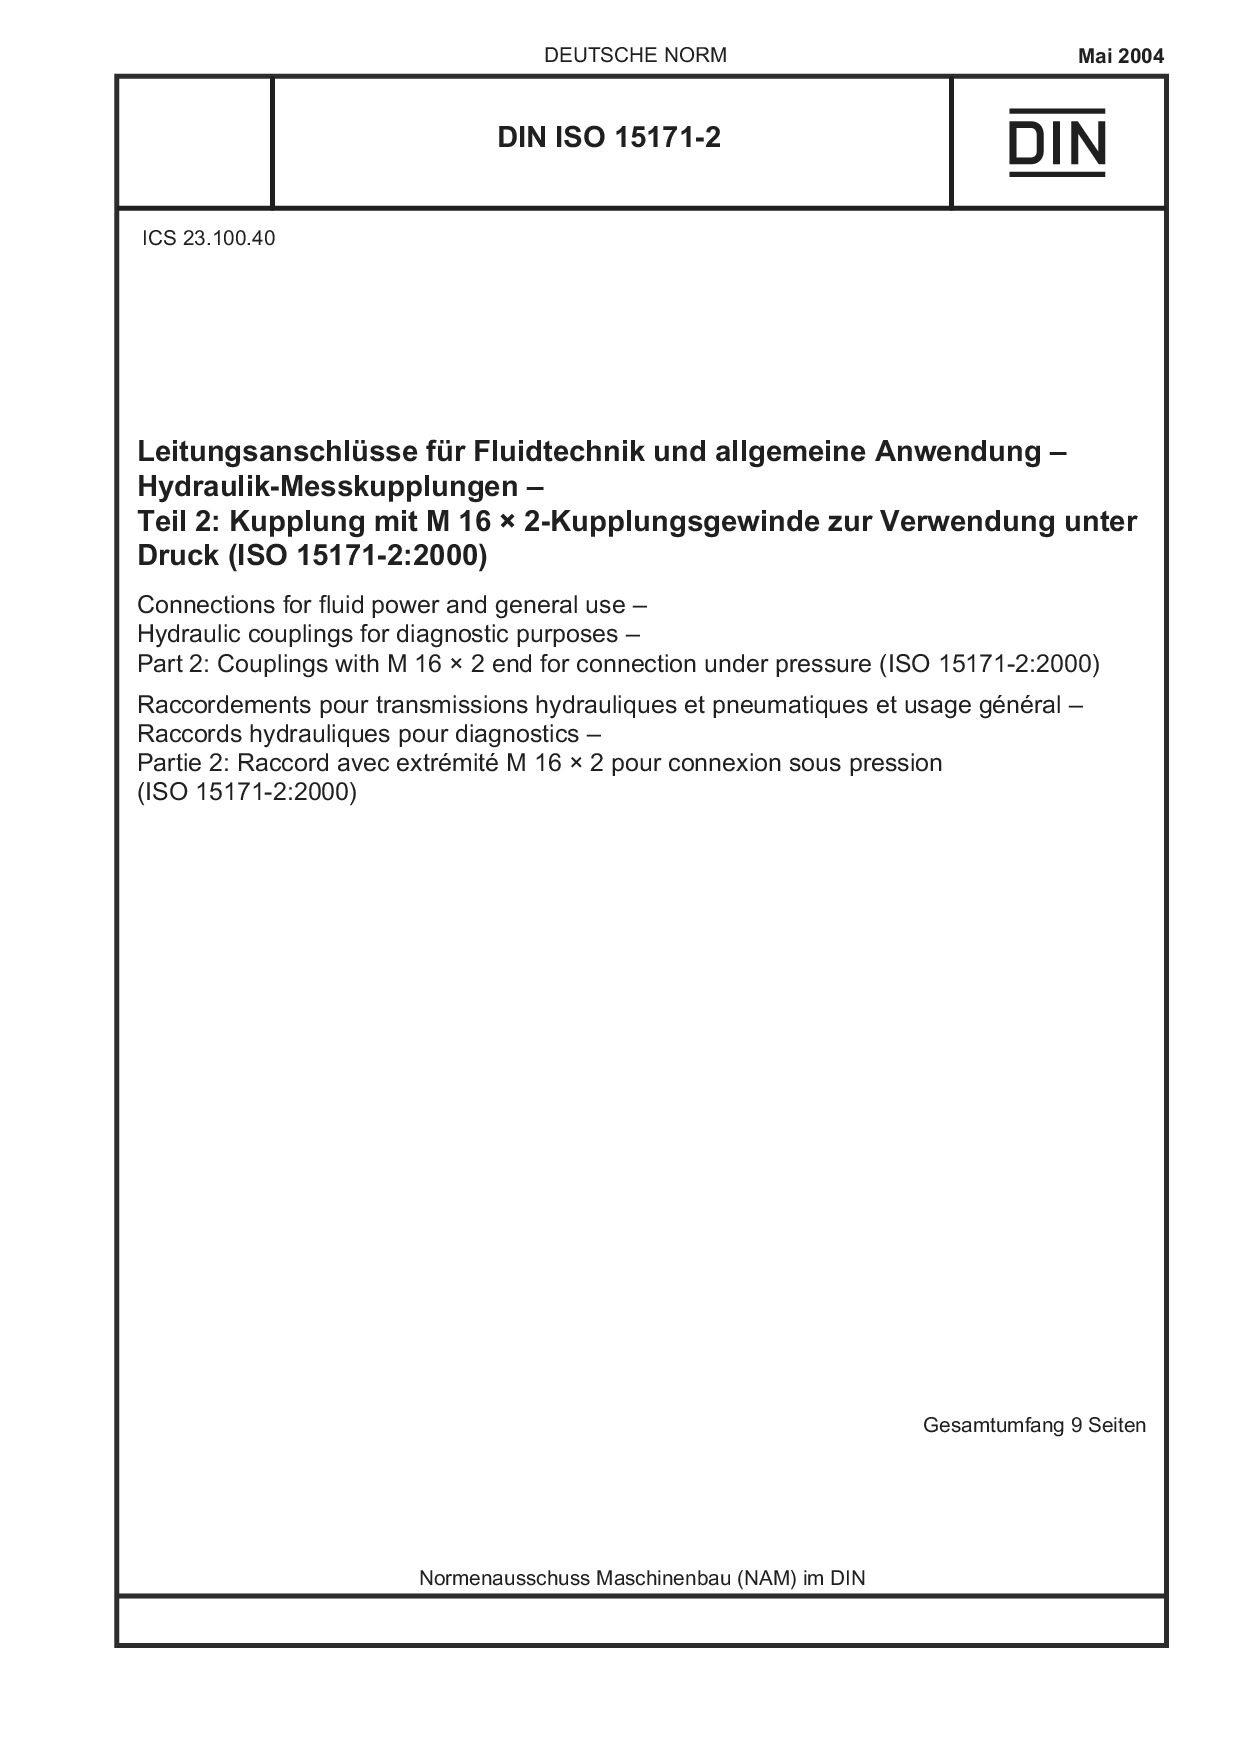 DIN ISO 15171-2:2004